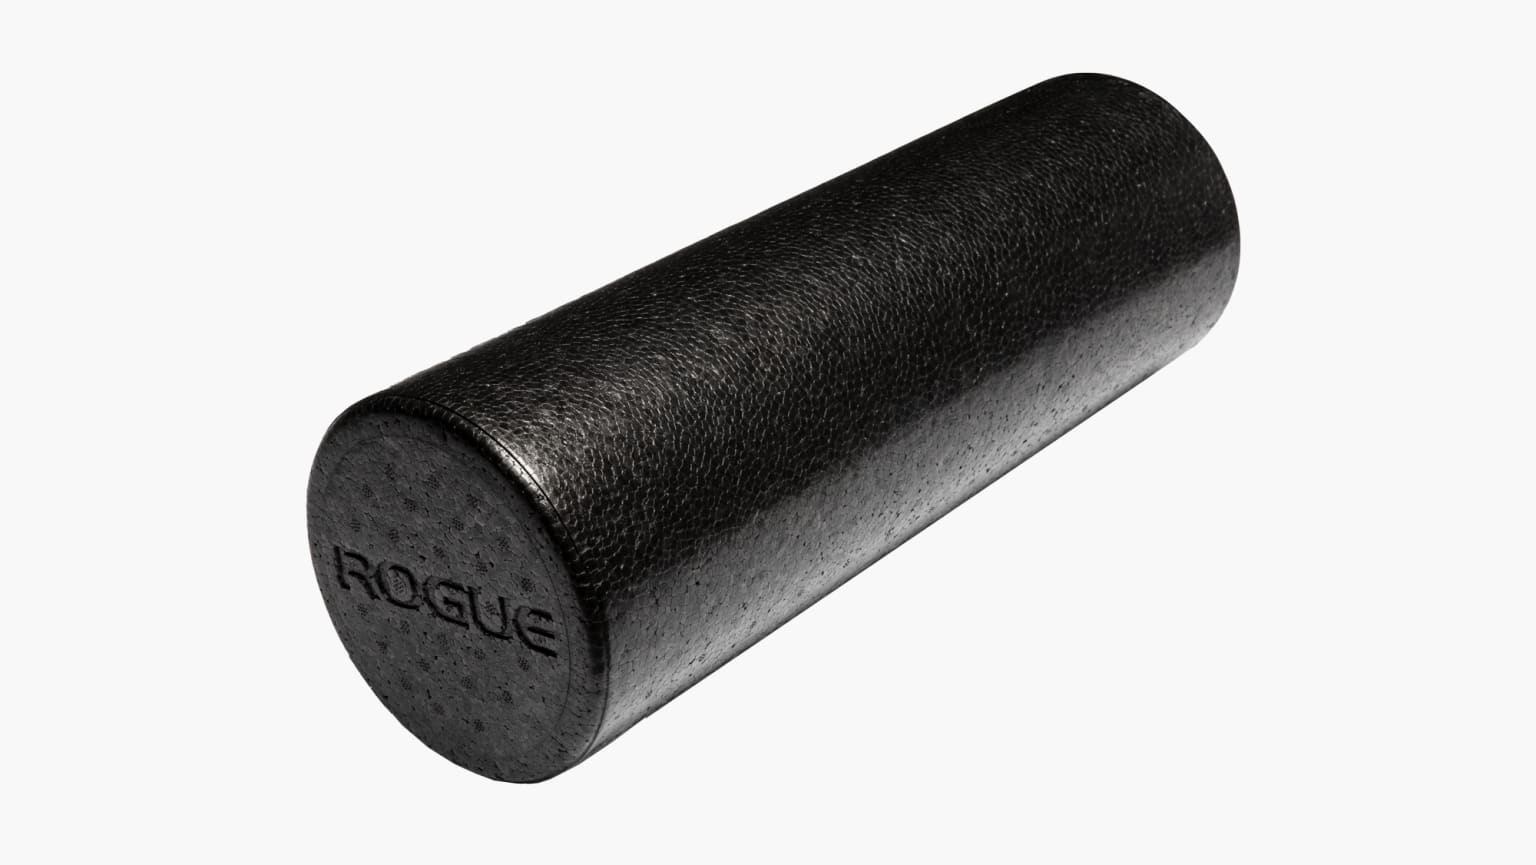 Rogue USA Foam Rollers